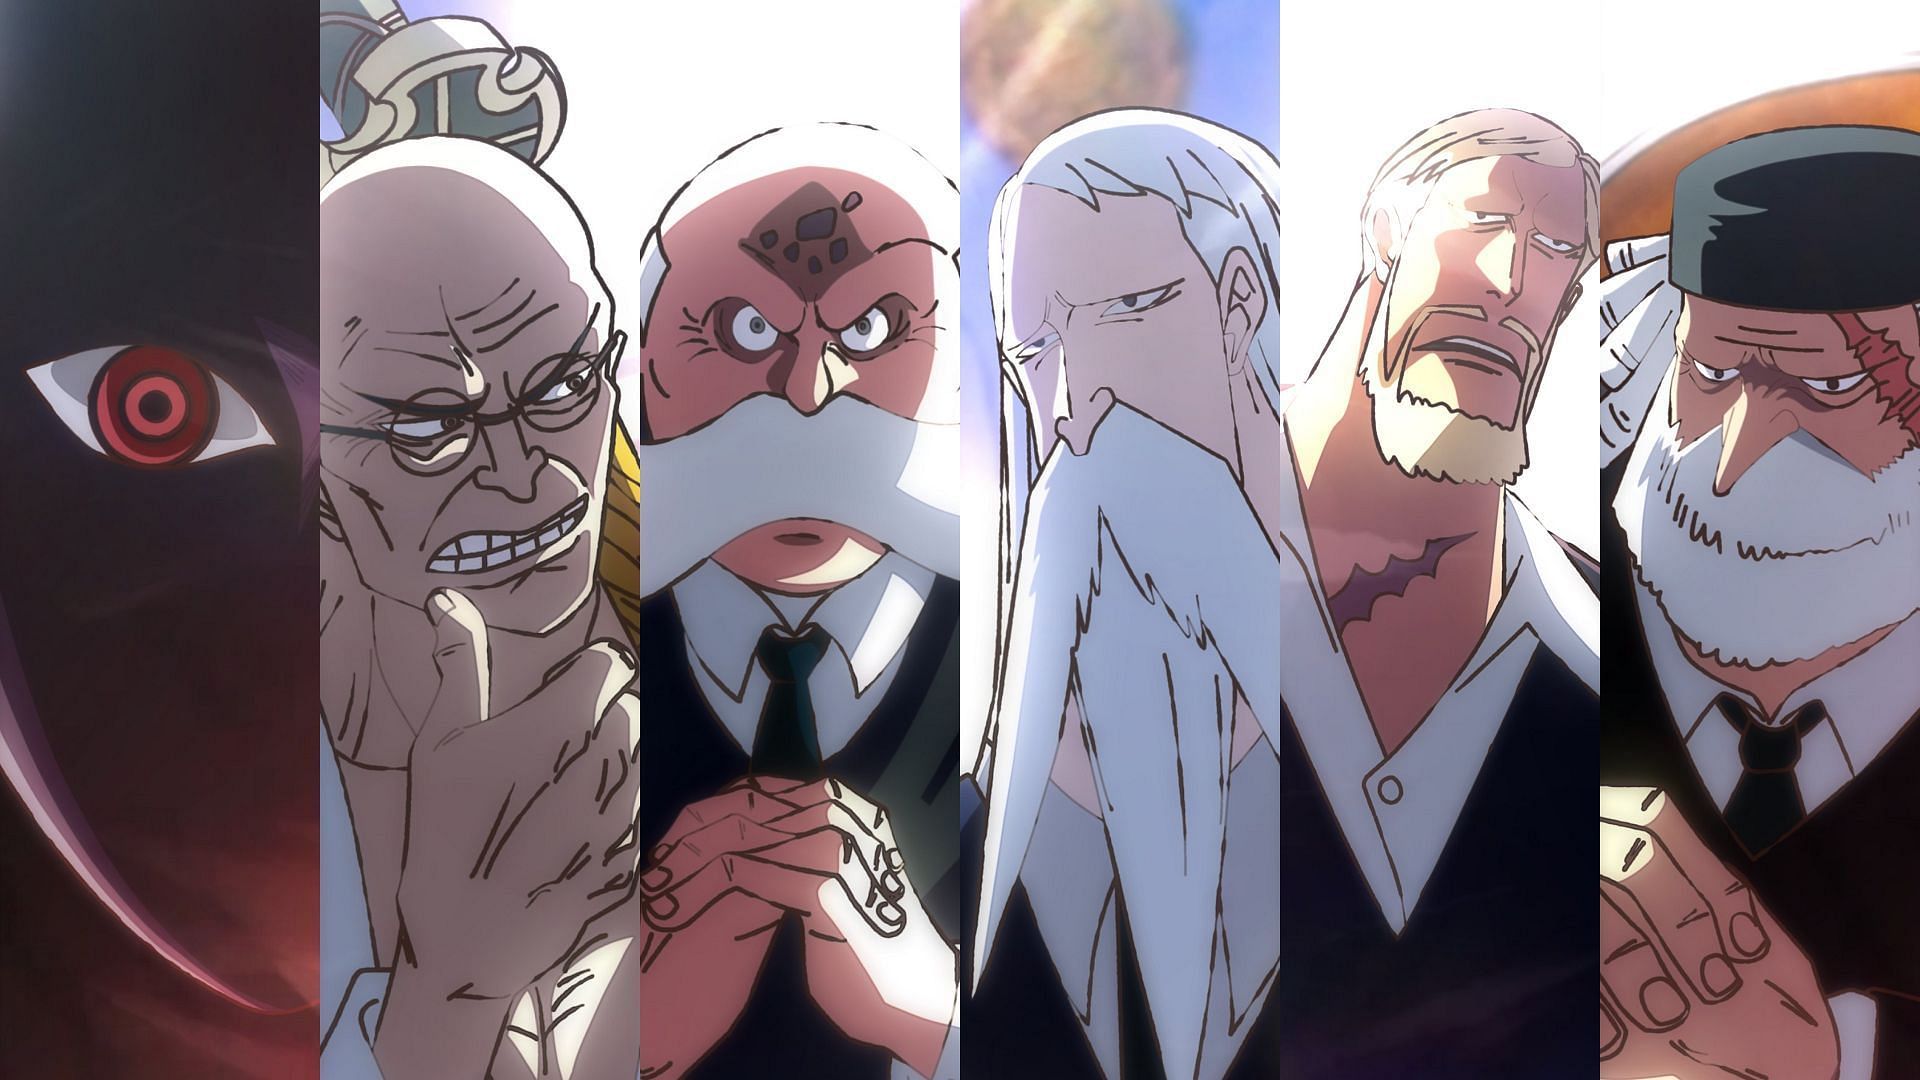 Imu-sama and the Five Elders (Image via Toei Animation, One Piece)